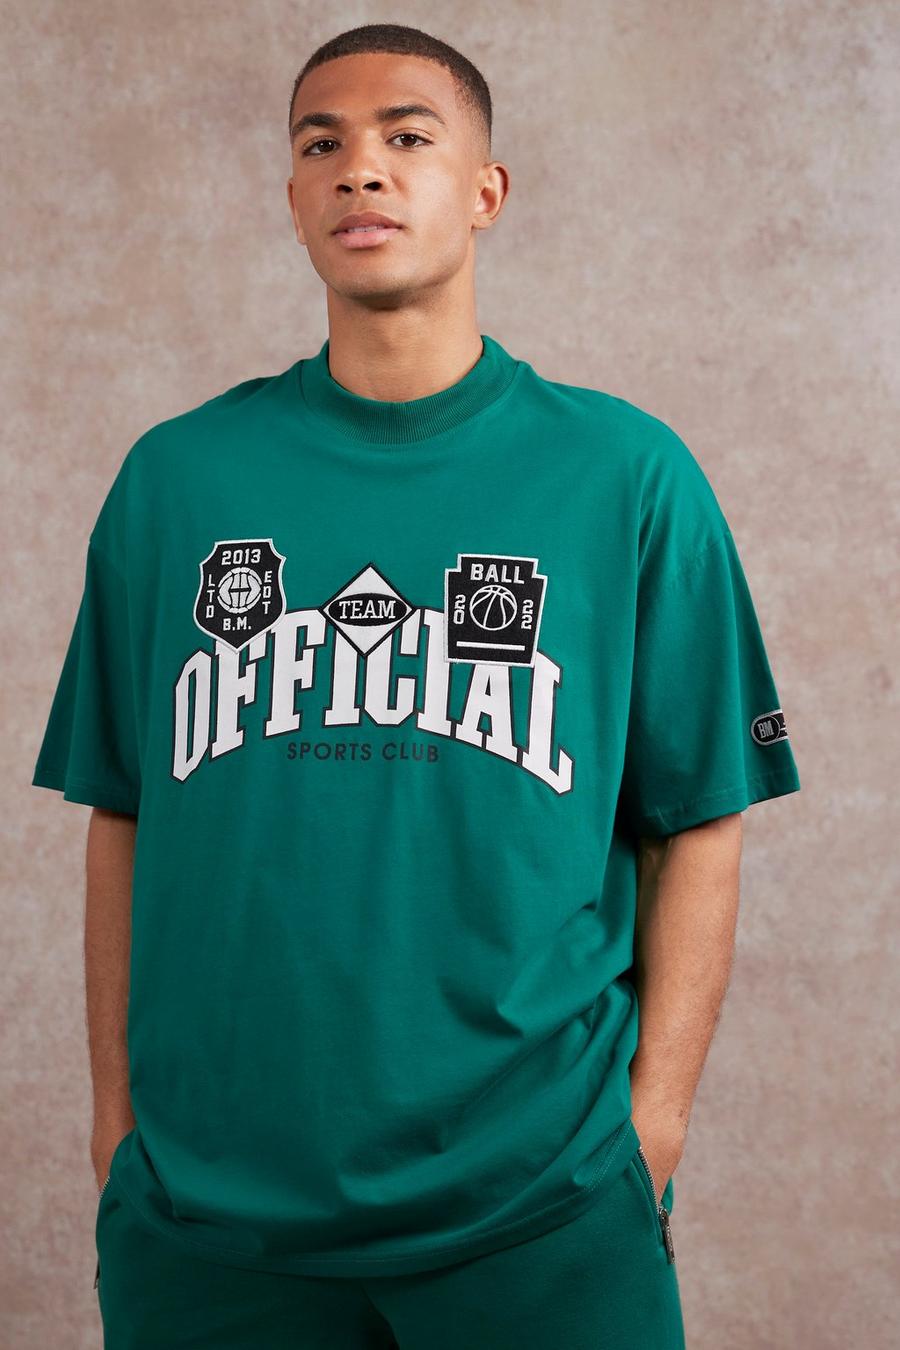 Green Oversized Applique Extended Neck T-shirt